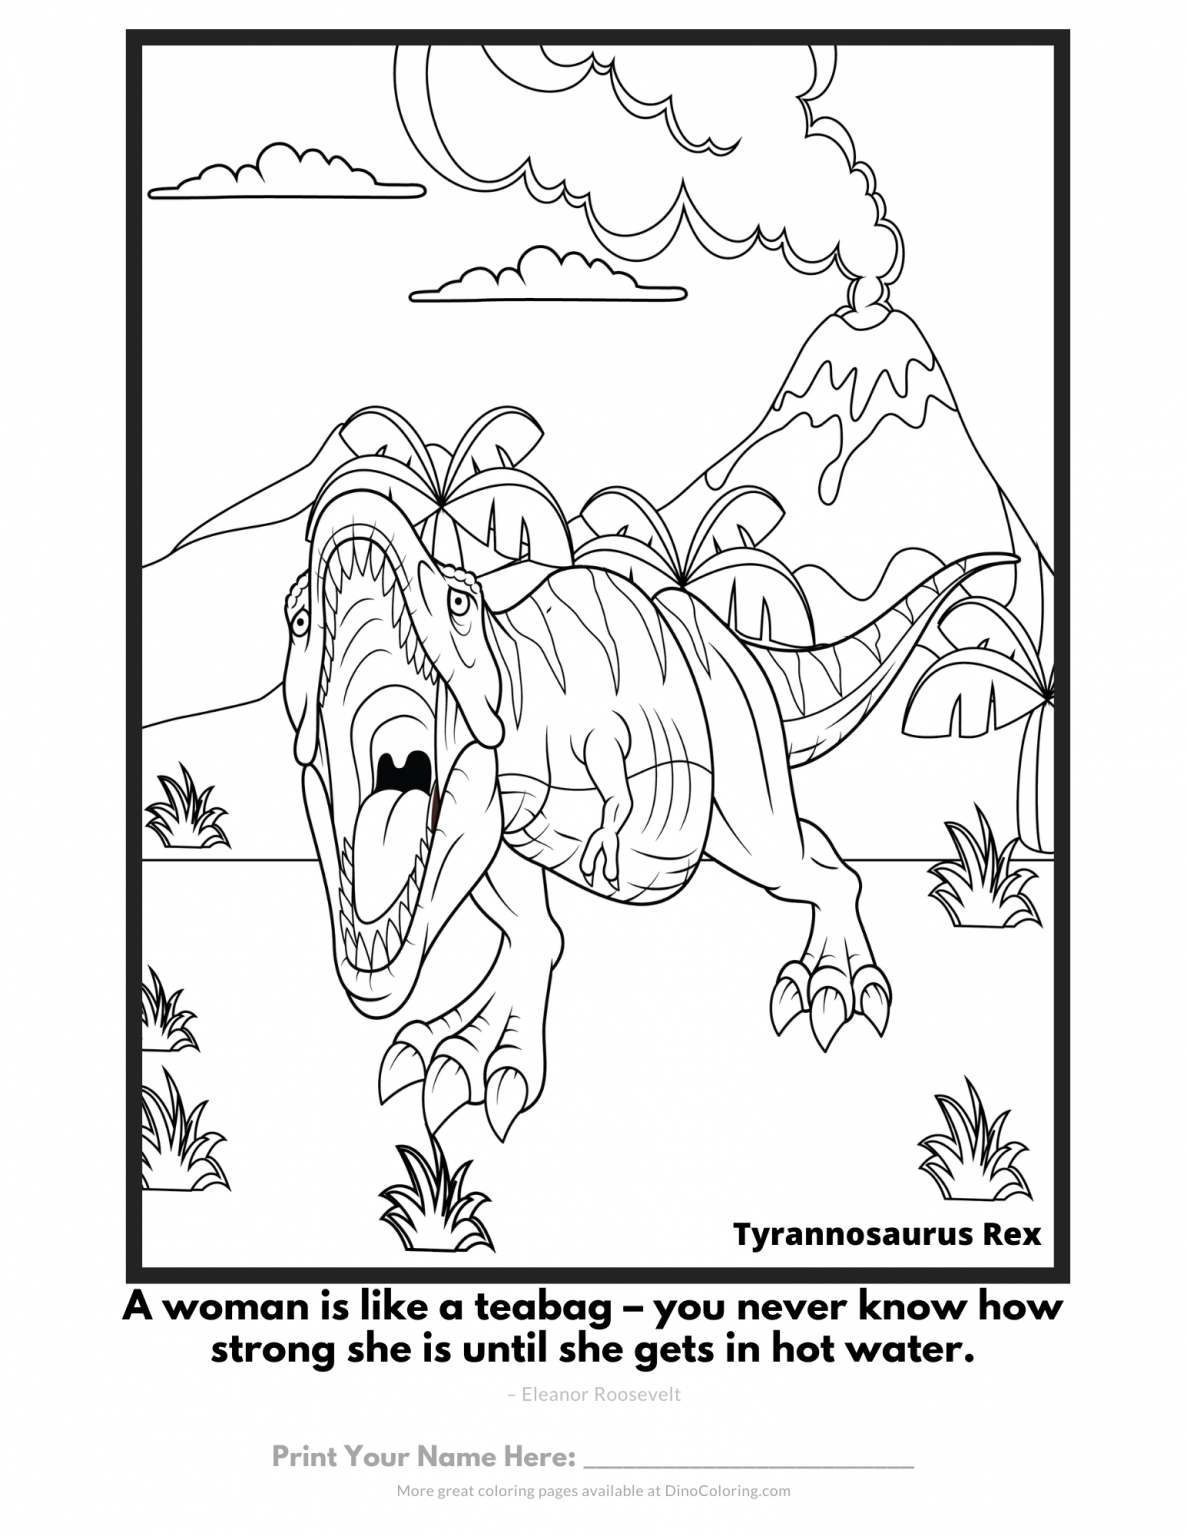 Laughing Tyrannosaurus Rex - Dinosaur Coloring Pages